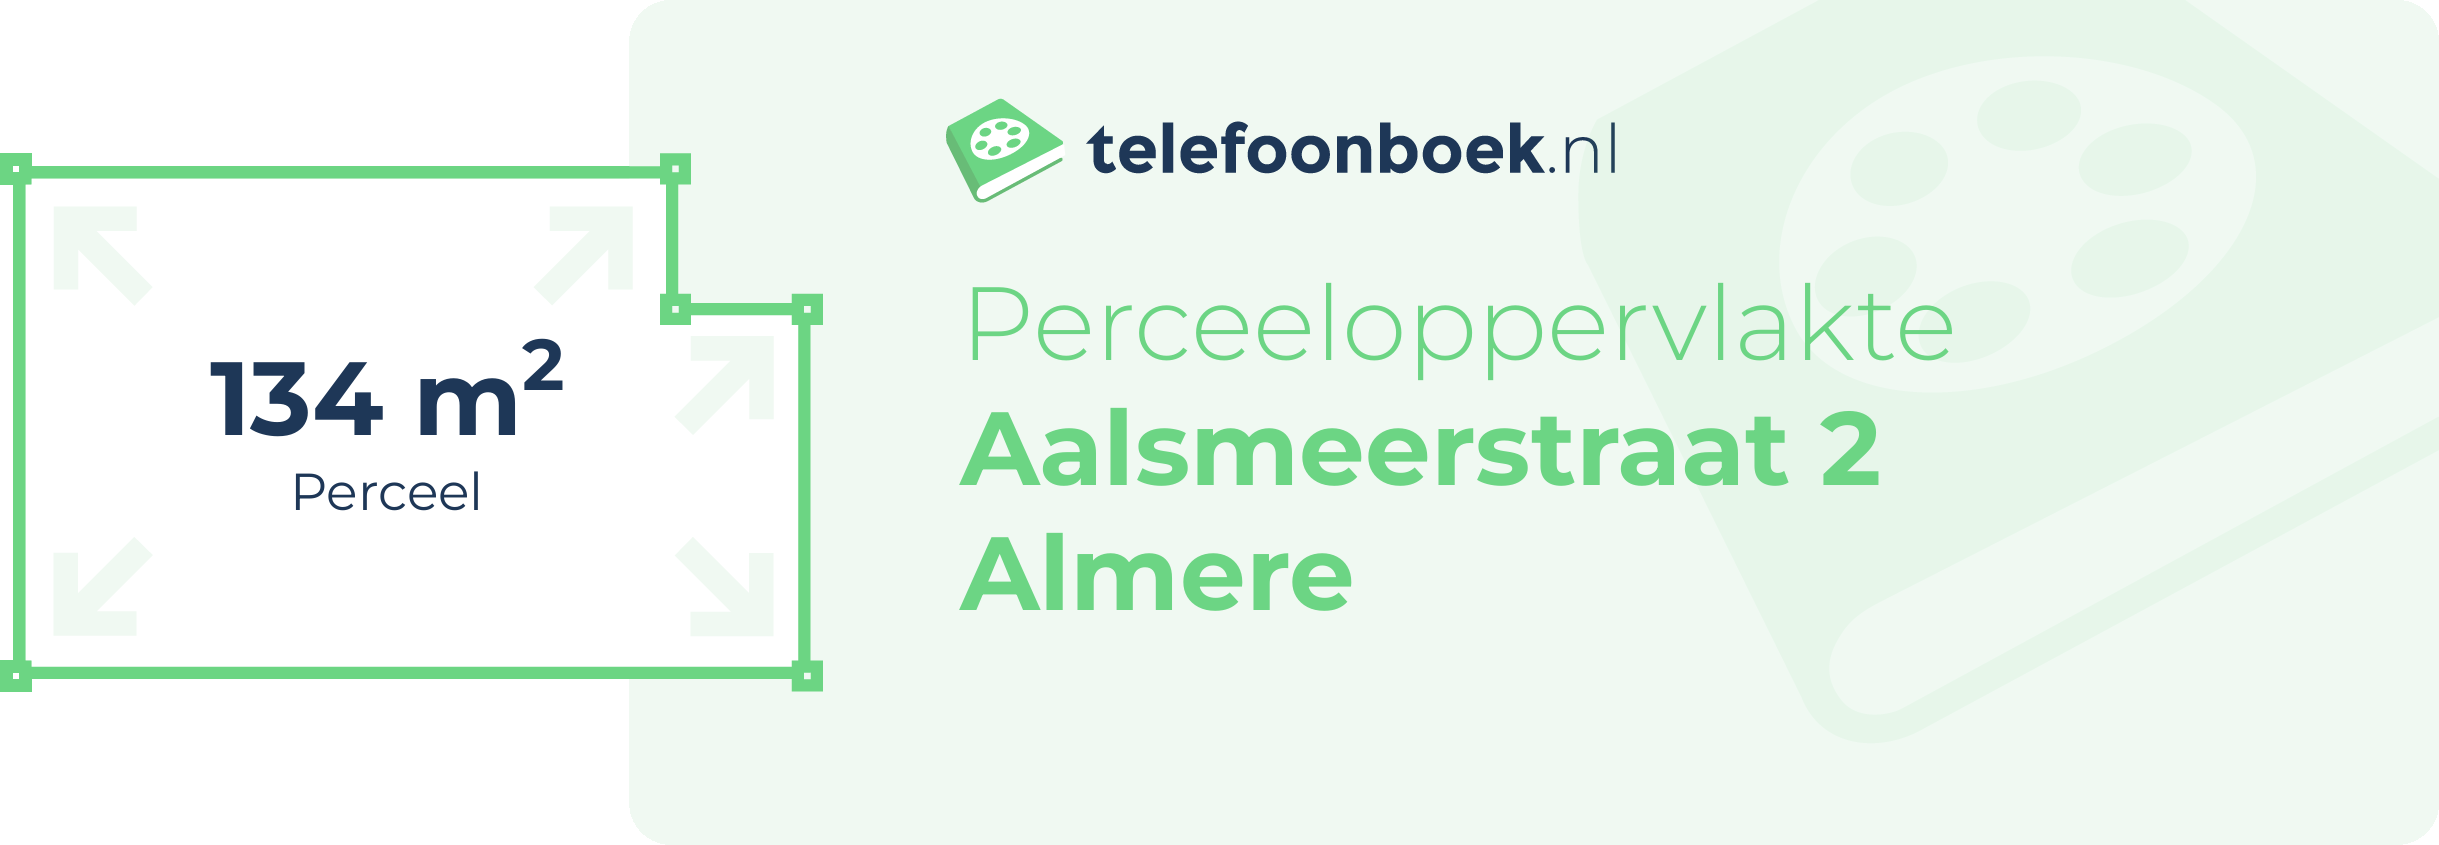 Perceeloppervlakte Aalsmeerstraat 2 Almere